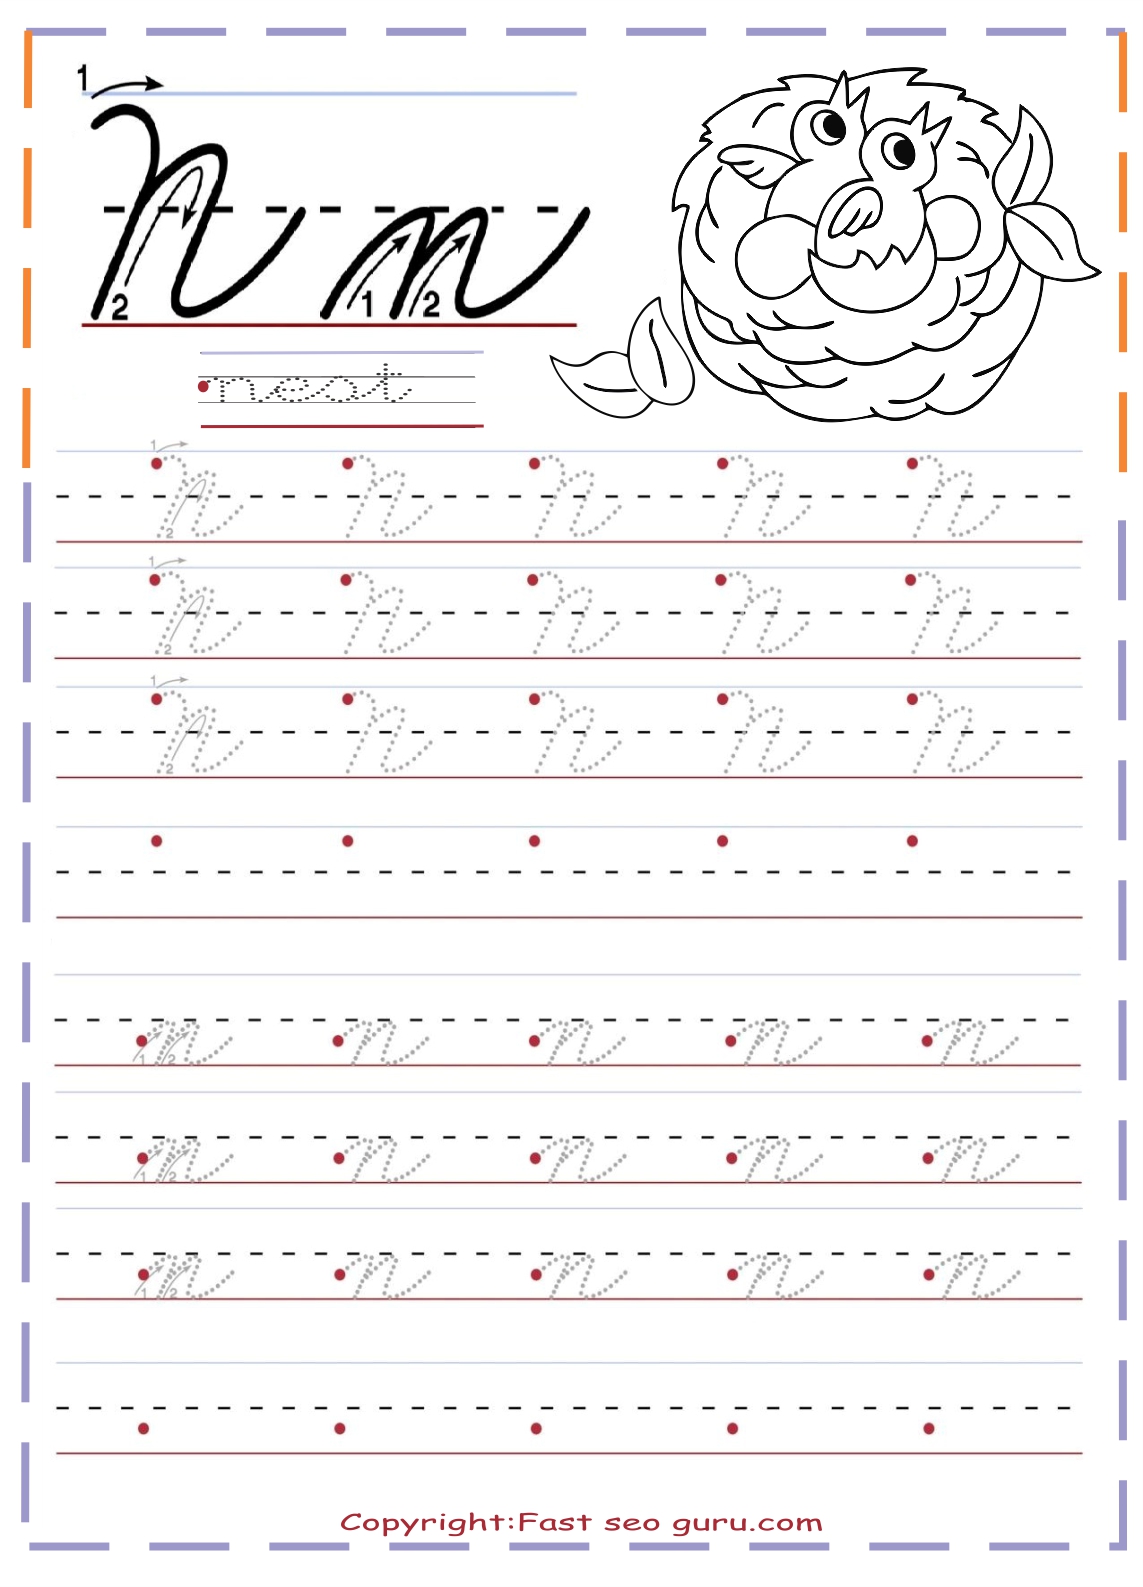 cursive handwriting tracing worksheets letter n for nest